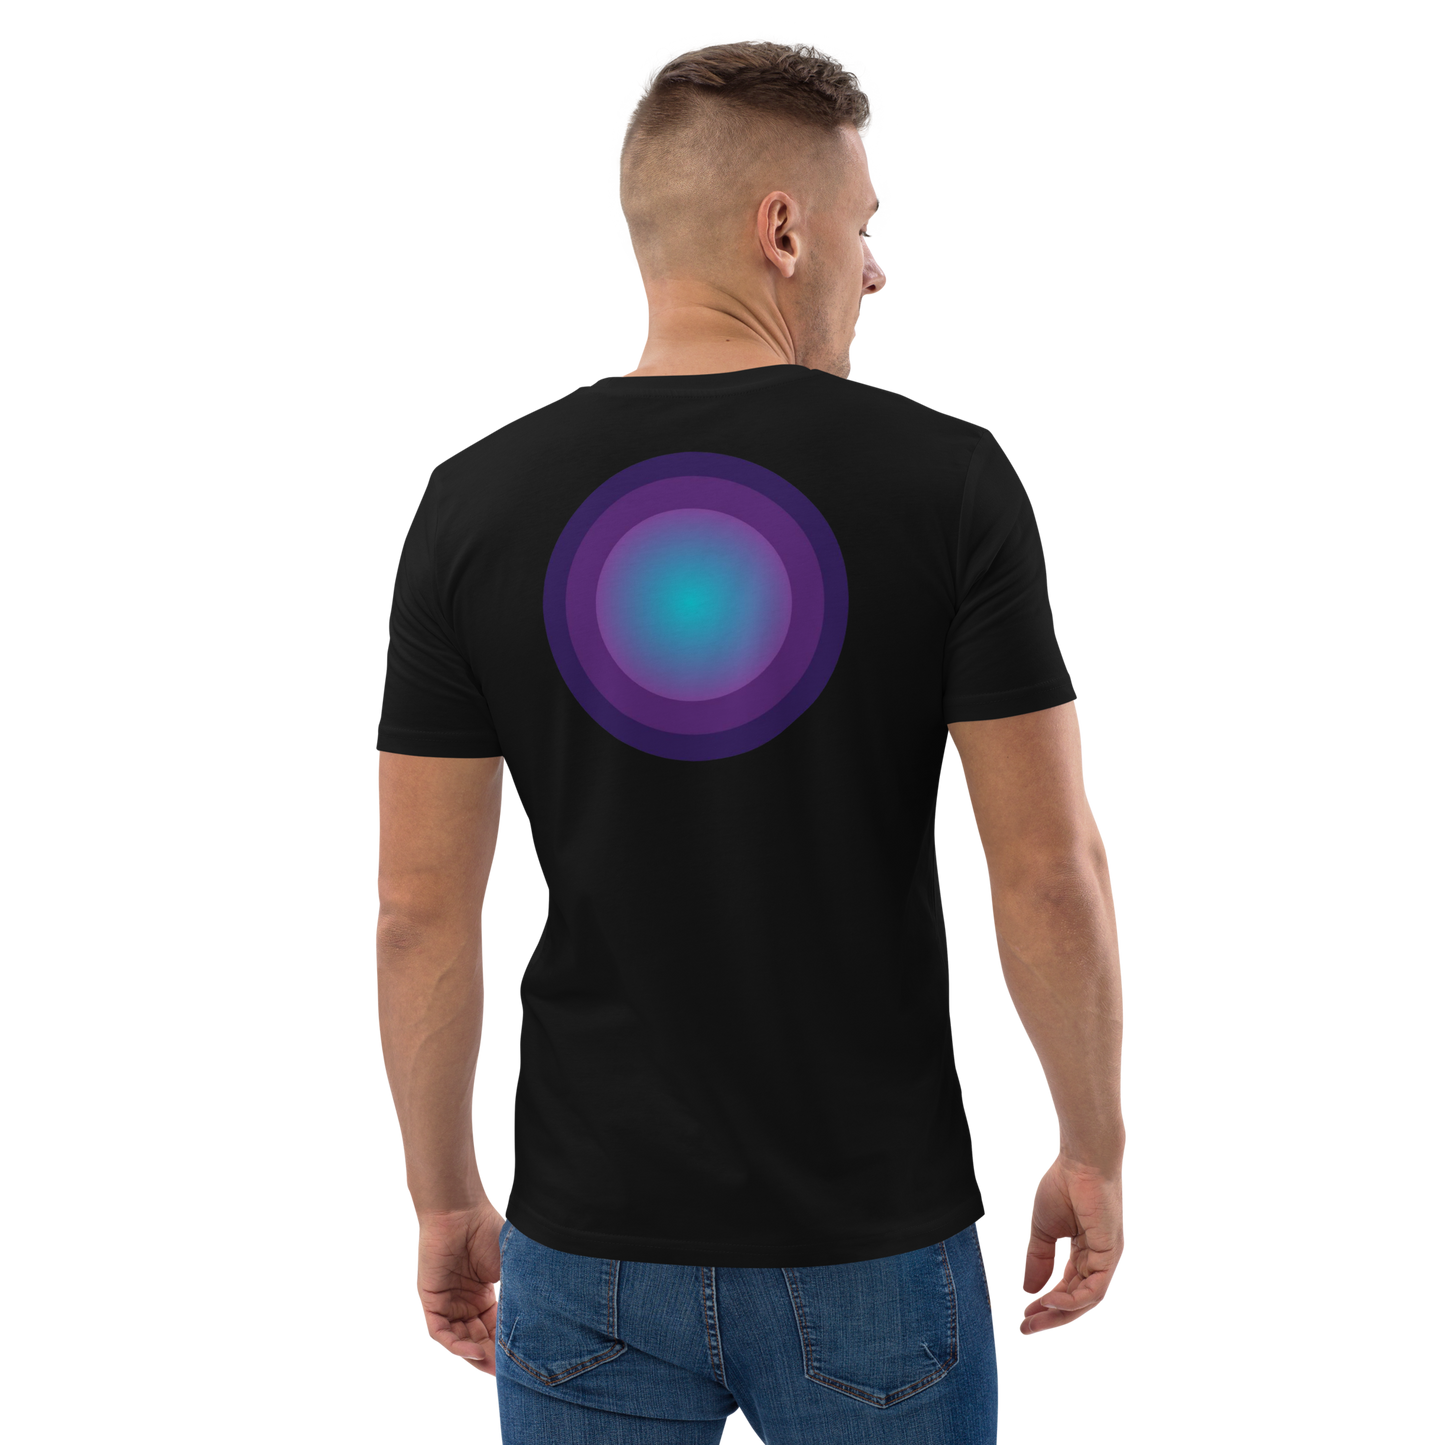 T-Shirt - Dione V1.0 - Black, Navy, Grey - Premium